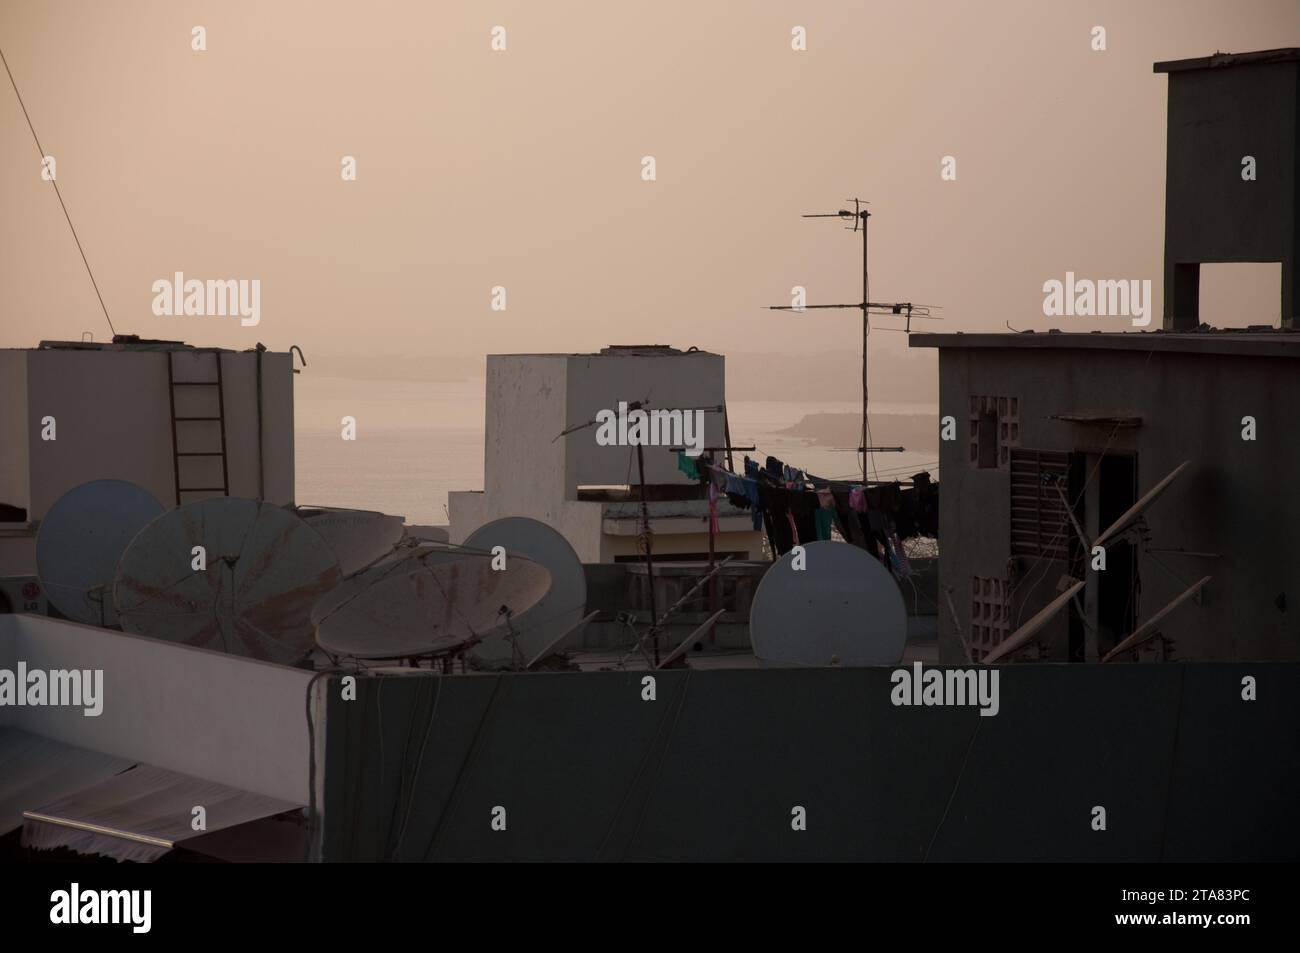 Rooftops at Dusk, Dakar, Senegal.  Atlantic Ocean in the distance.  Satellite dishes Stock Photo